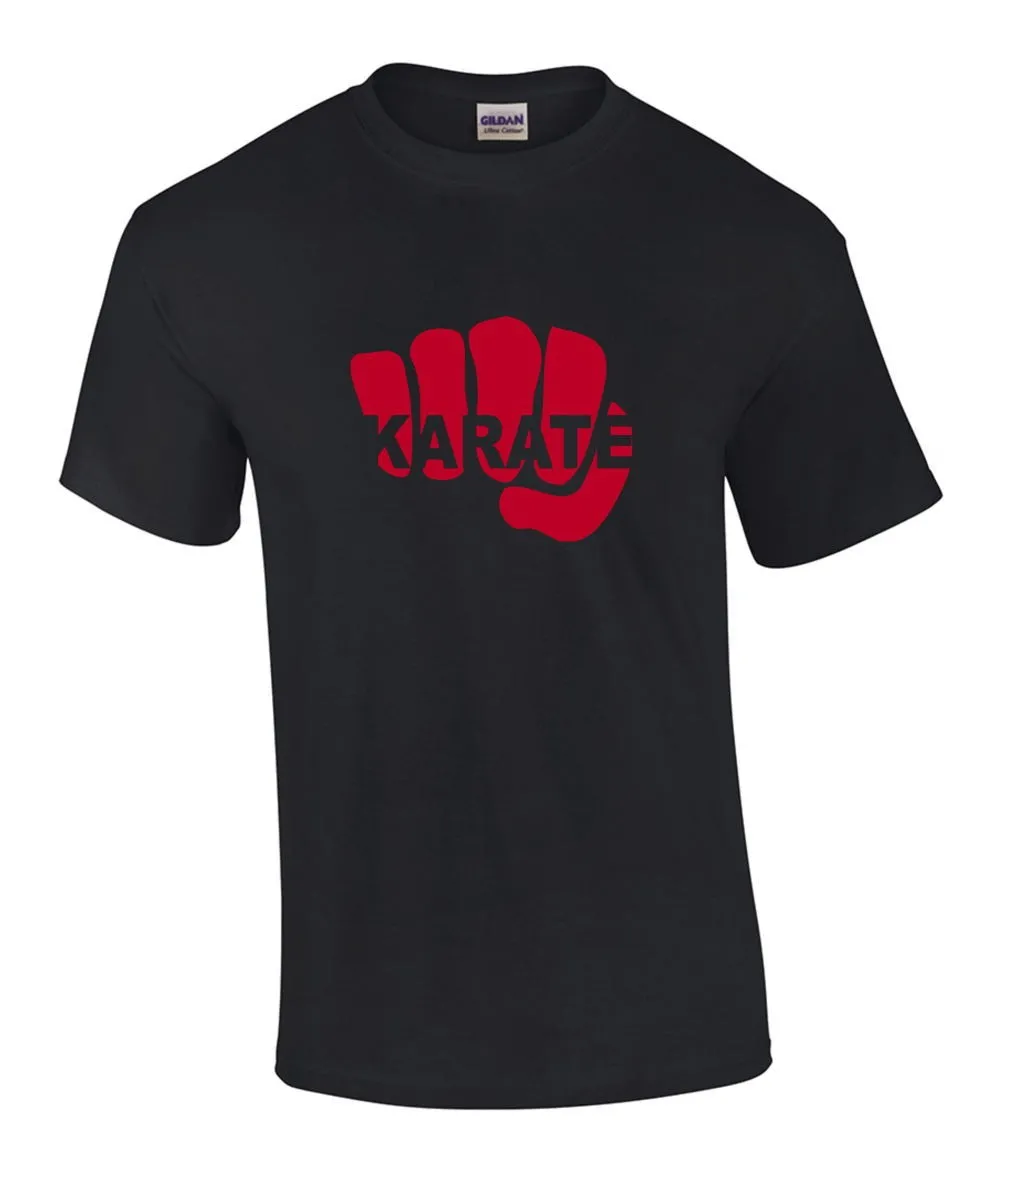 T-shirt Karate fist